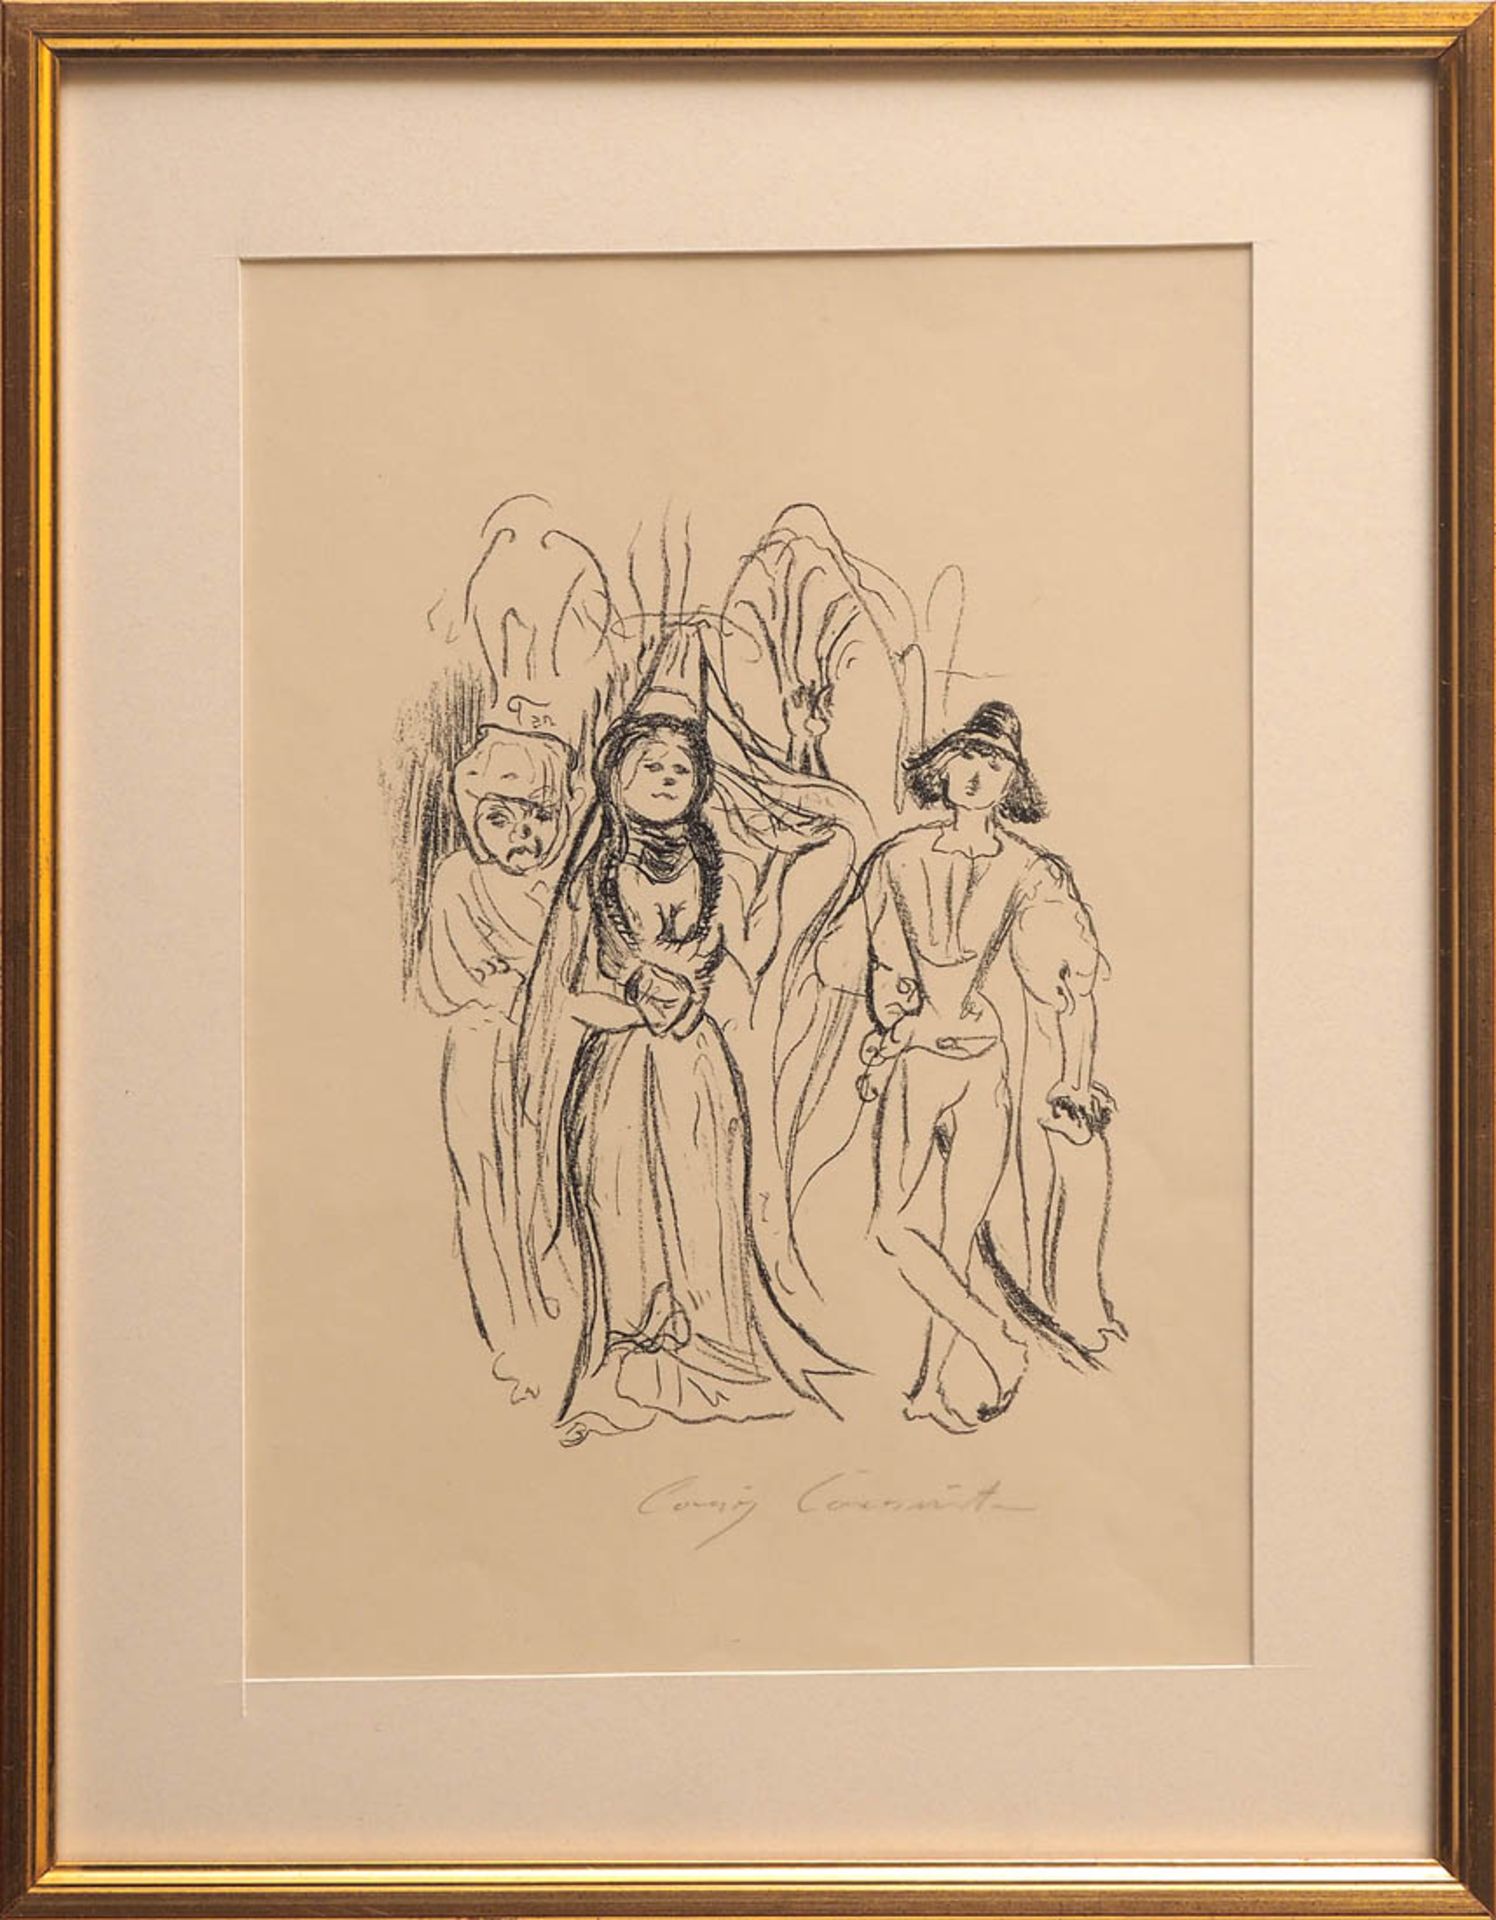 Corinth, Lovis, 1858 - 1925 Lithographie bet. "Frau Konnetable", Illustration zu Honoré de Balzac.